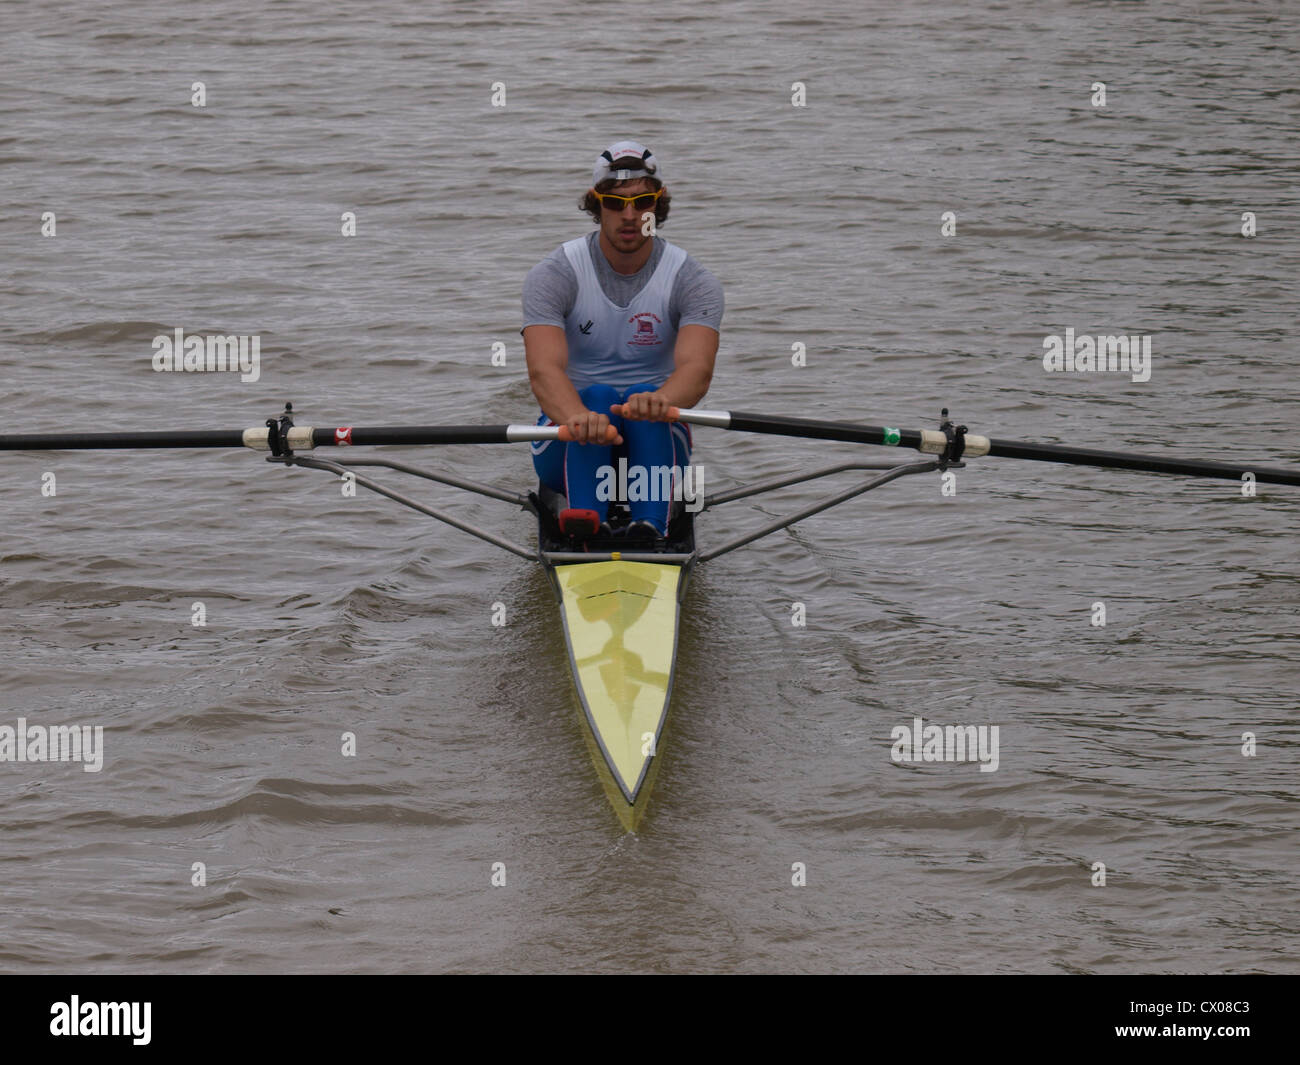 GB rowing team member in training, UK Stock Photo